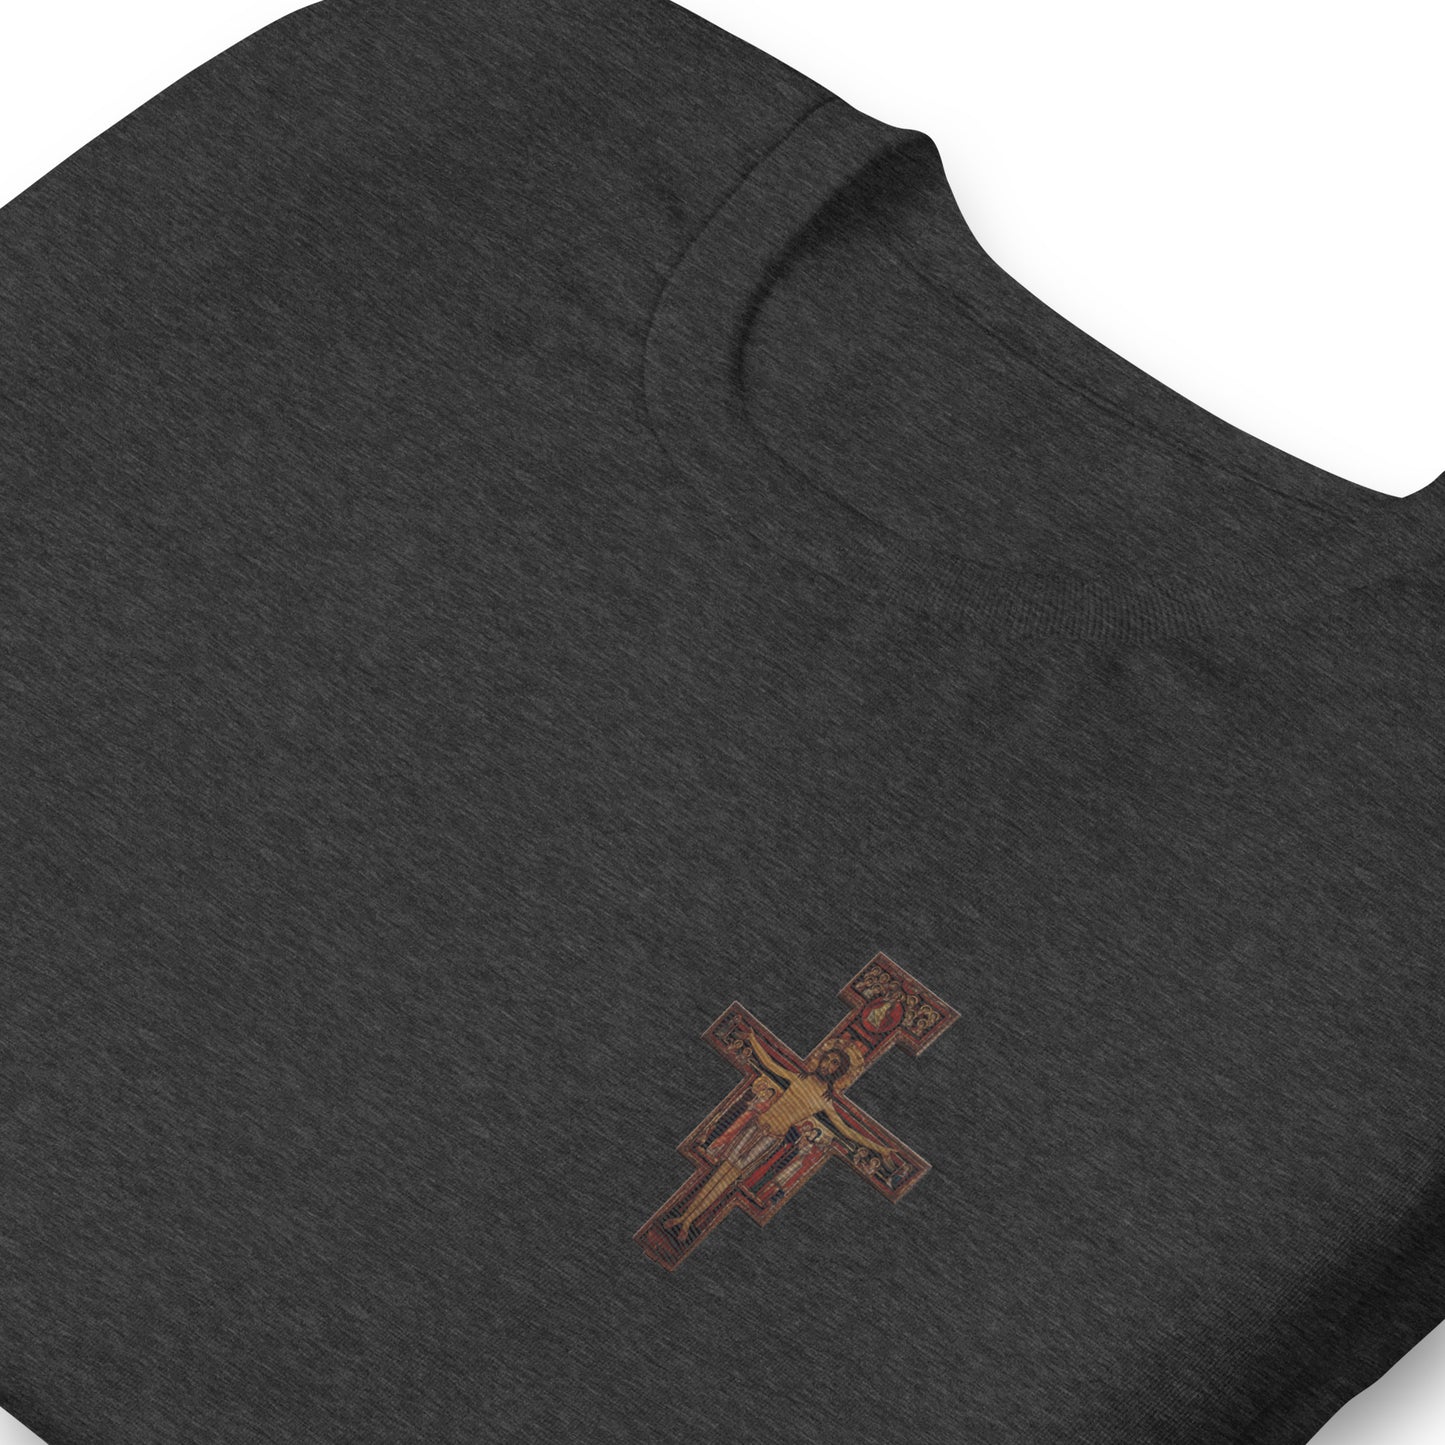 Embroidered Crucifix Shirt